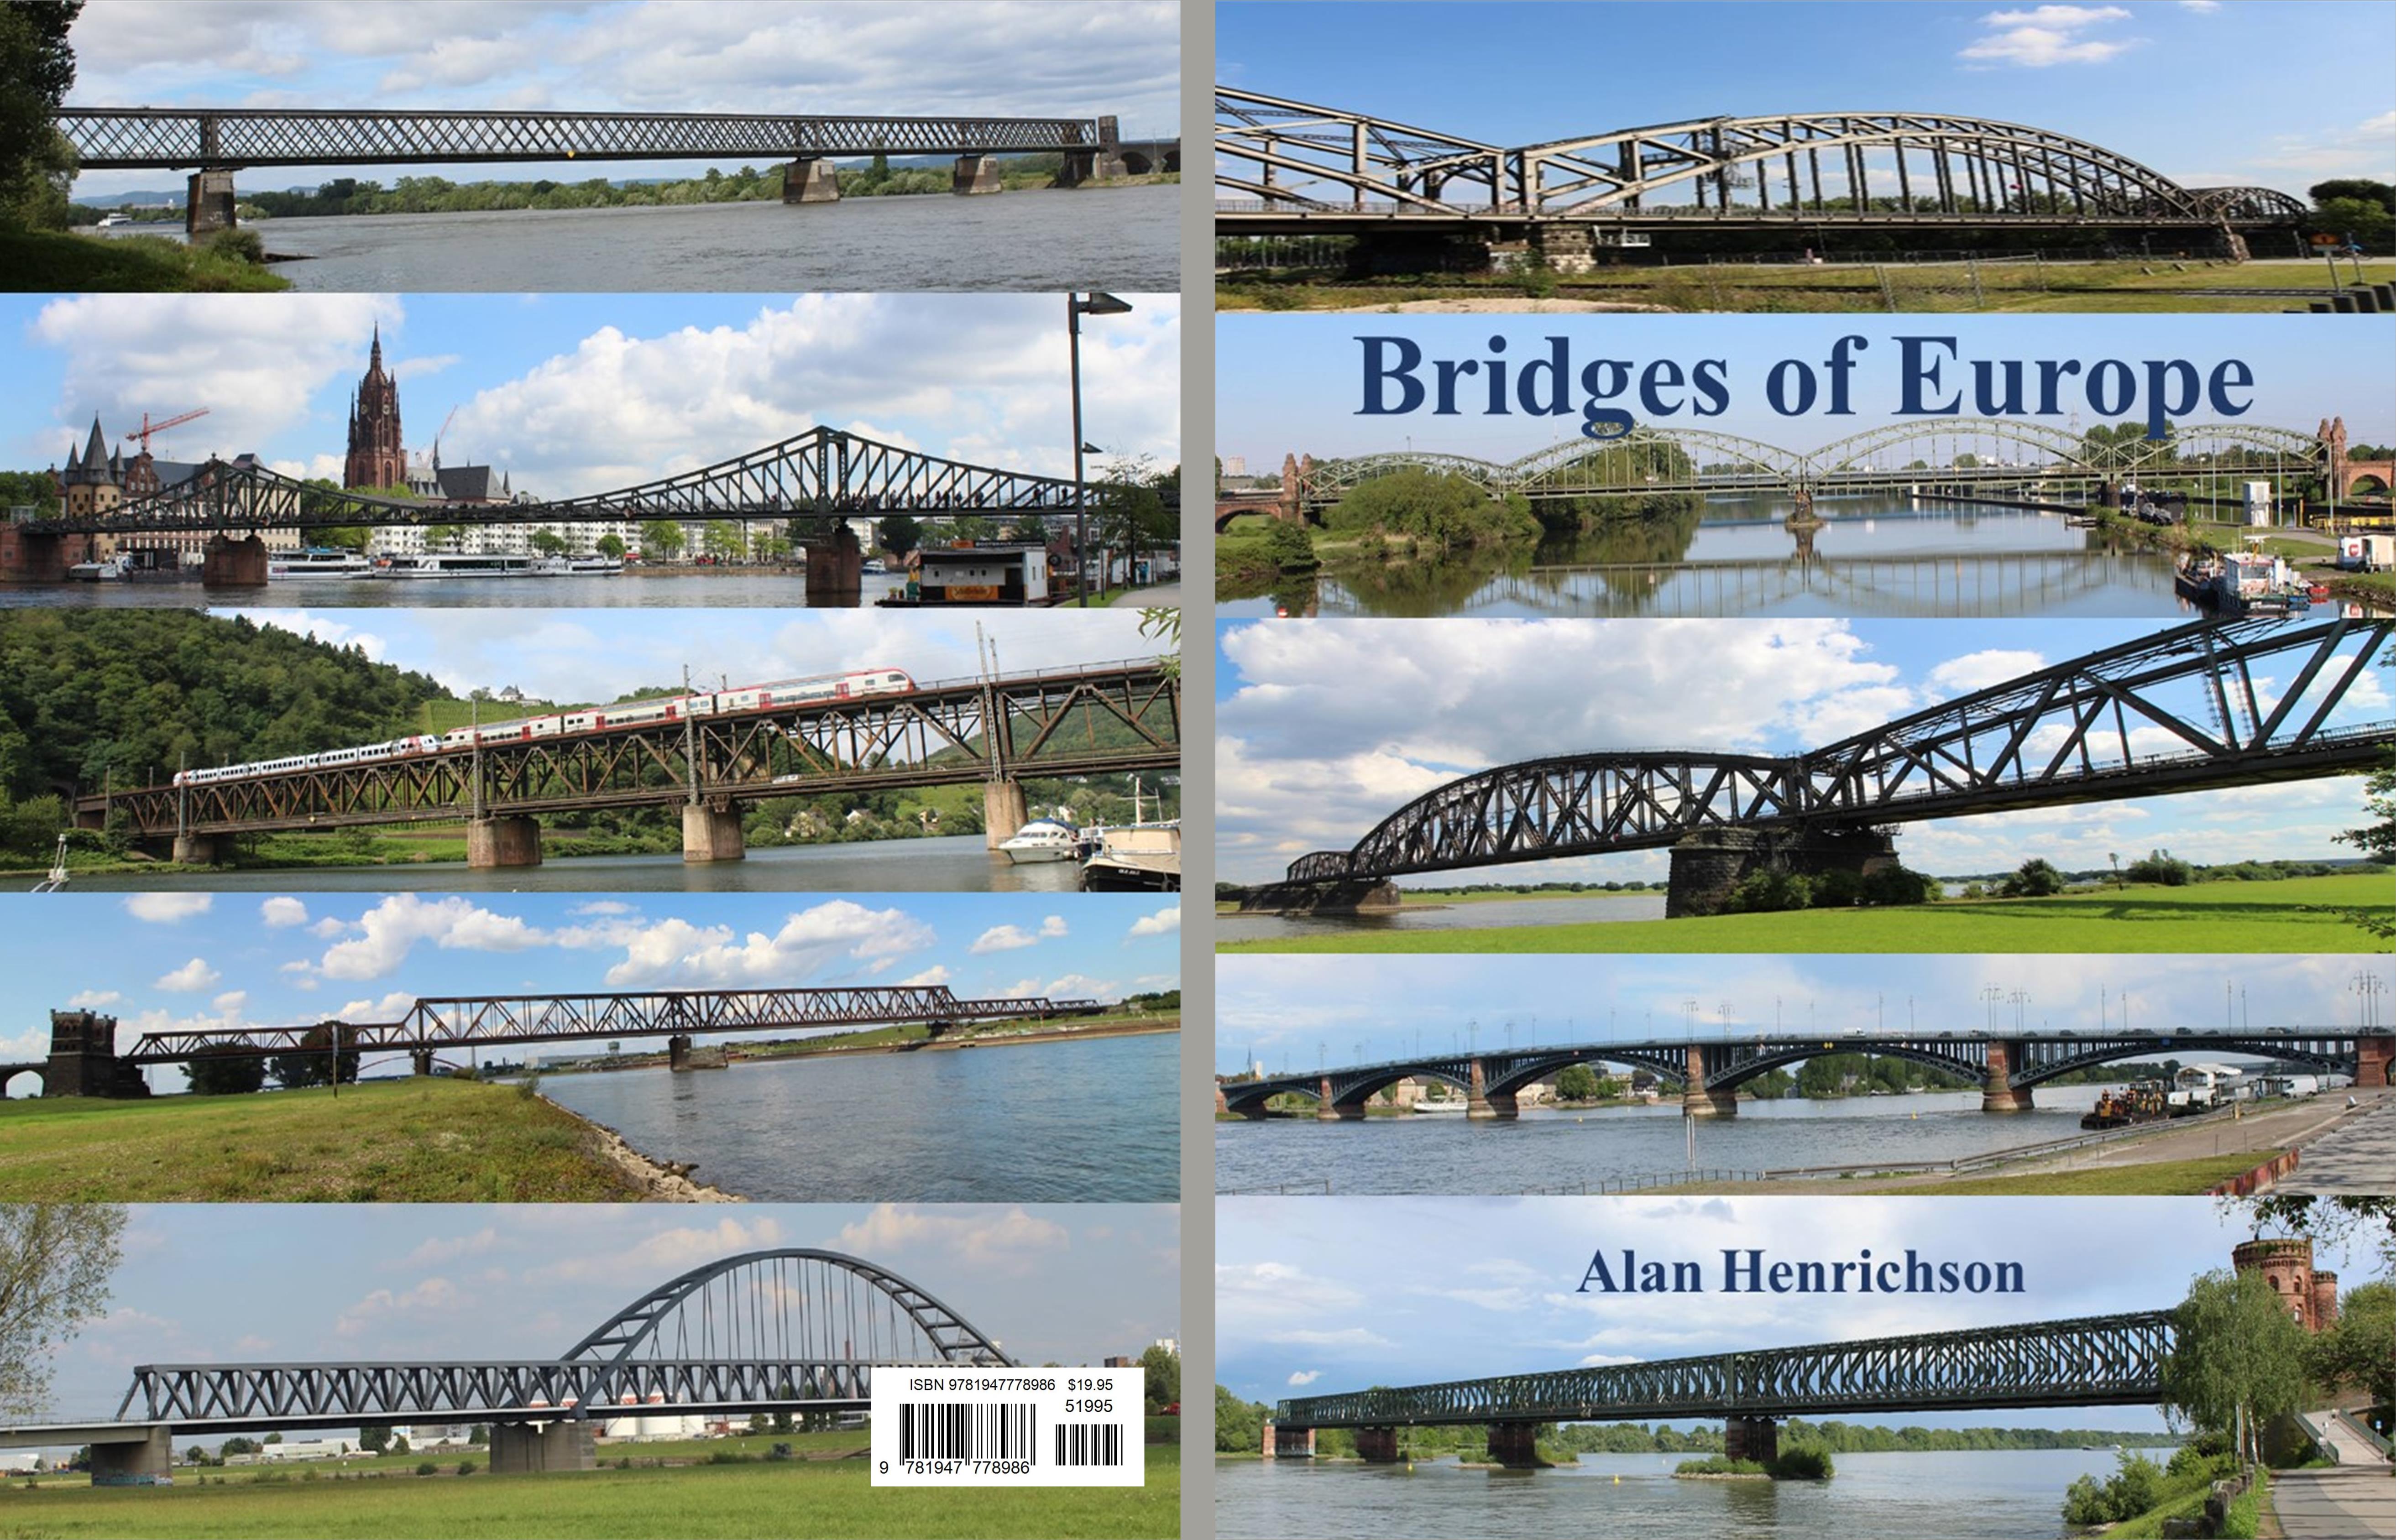 Bridges of Europe cover image